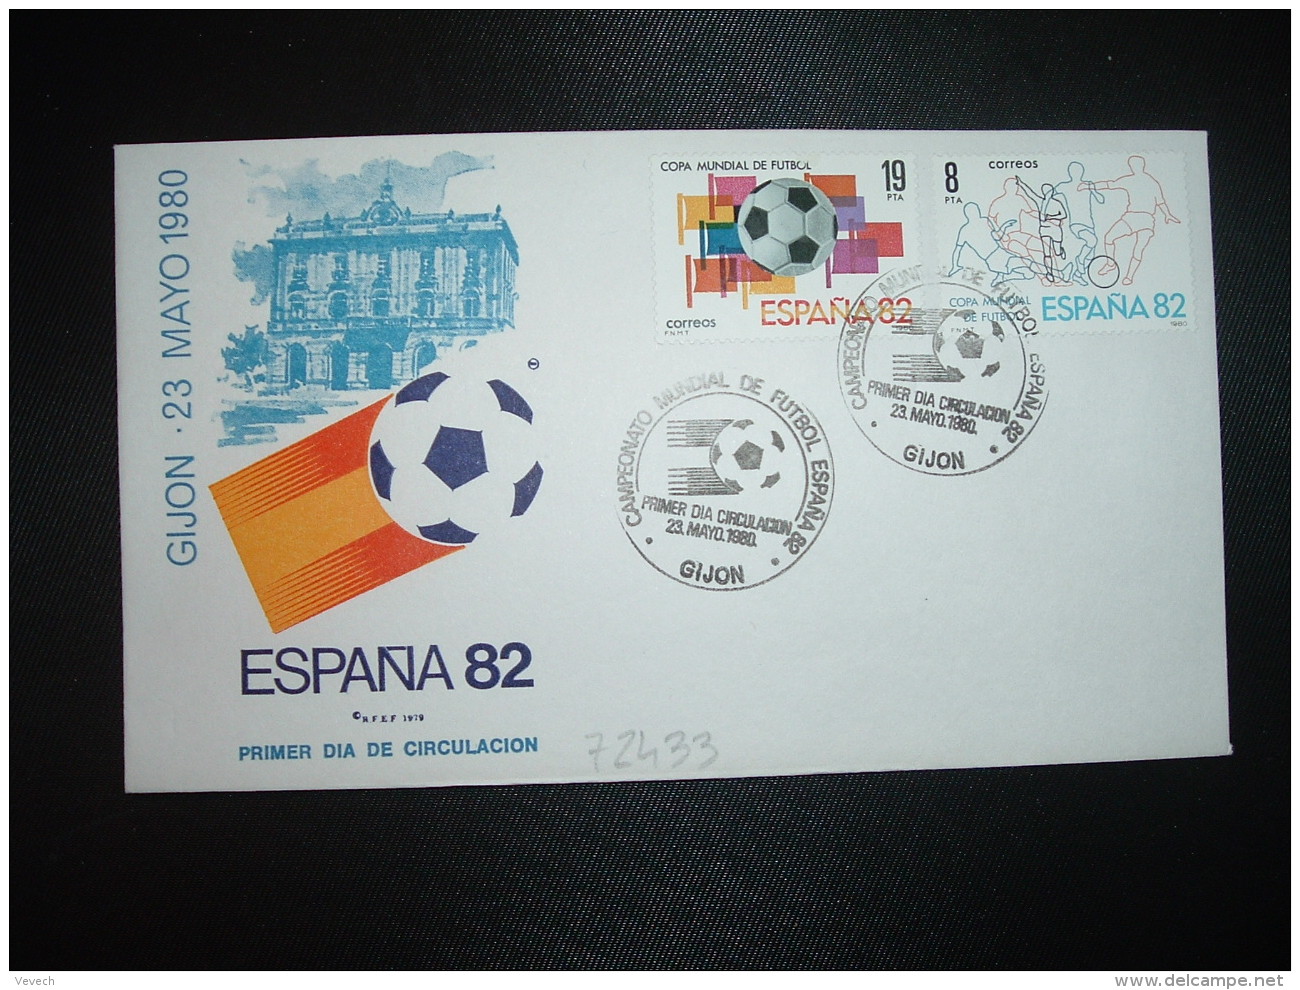 LETTRE TP ESPAGNE 19P + 8P OBL.23 MAYO 1980 FDC LA GIJON CAMPEONATO MONDIAL DE FUTBOL ESPANA 82 - 1982 – Espagne